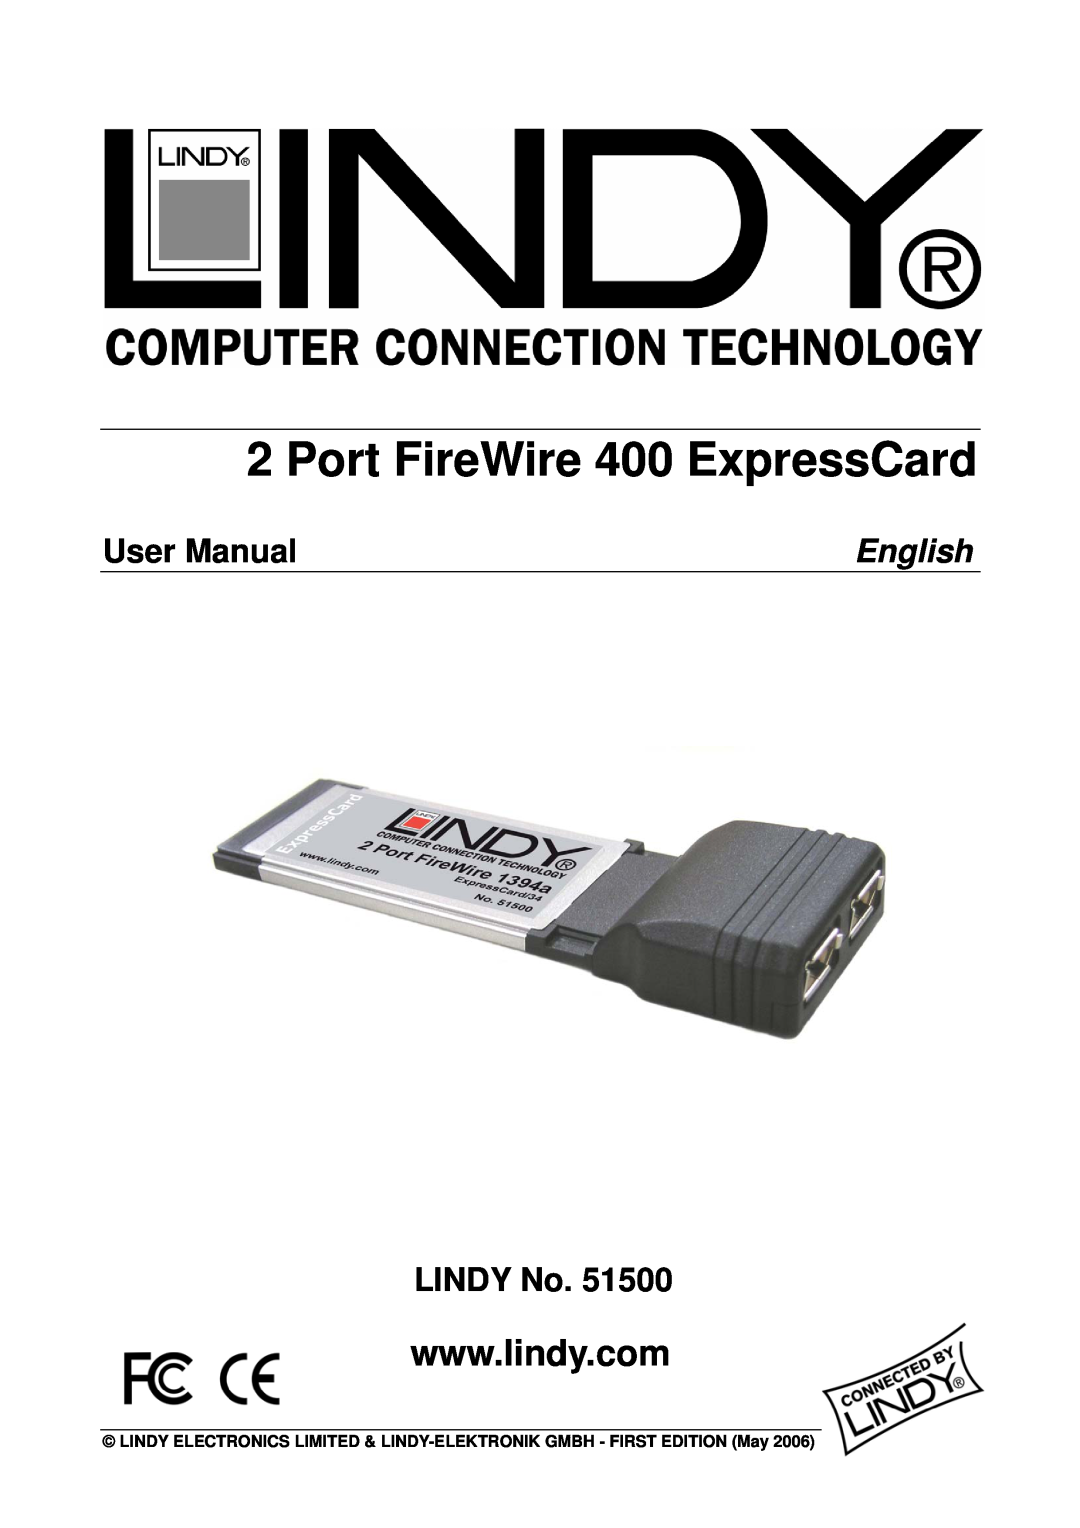 Lindy 51500 user manual User Manual, LINDY No, Port FireWire 400 ExpressCard, English 